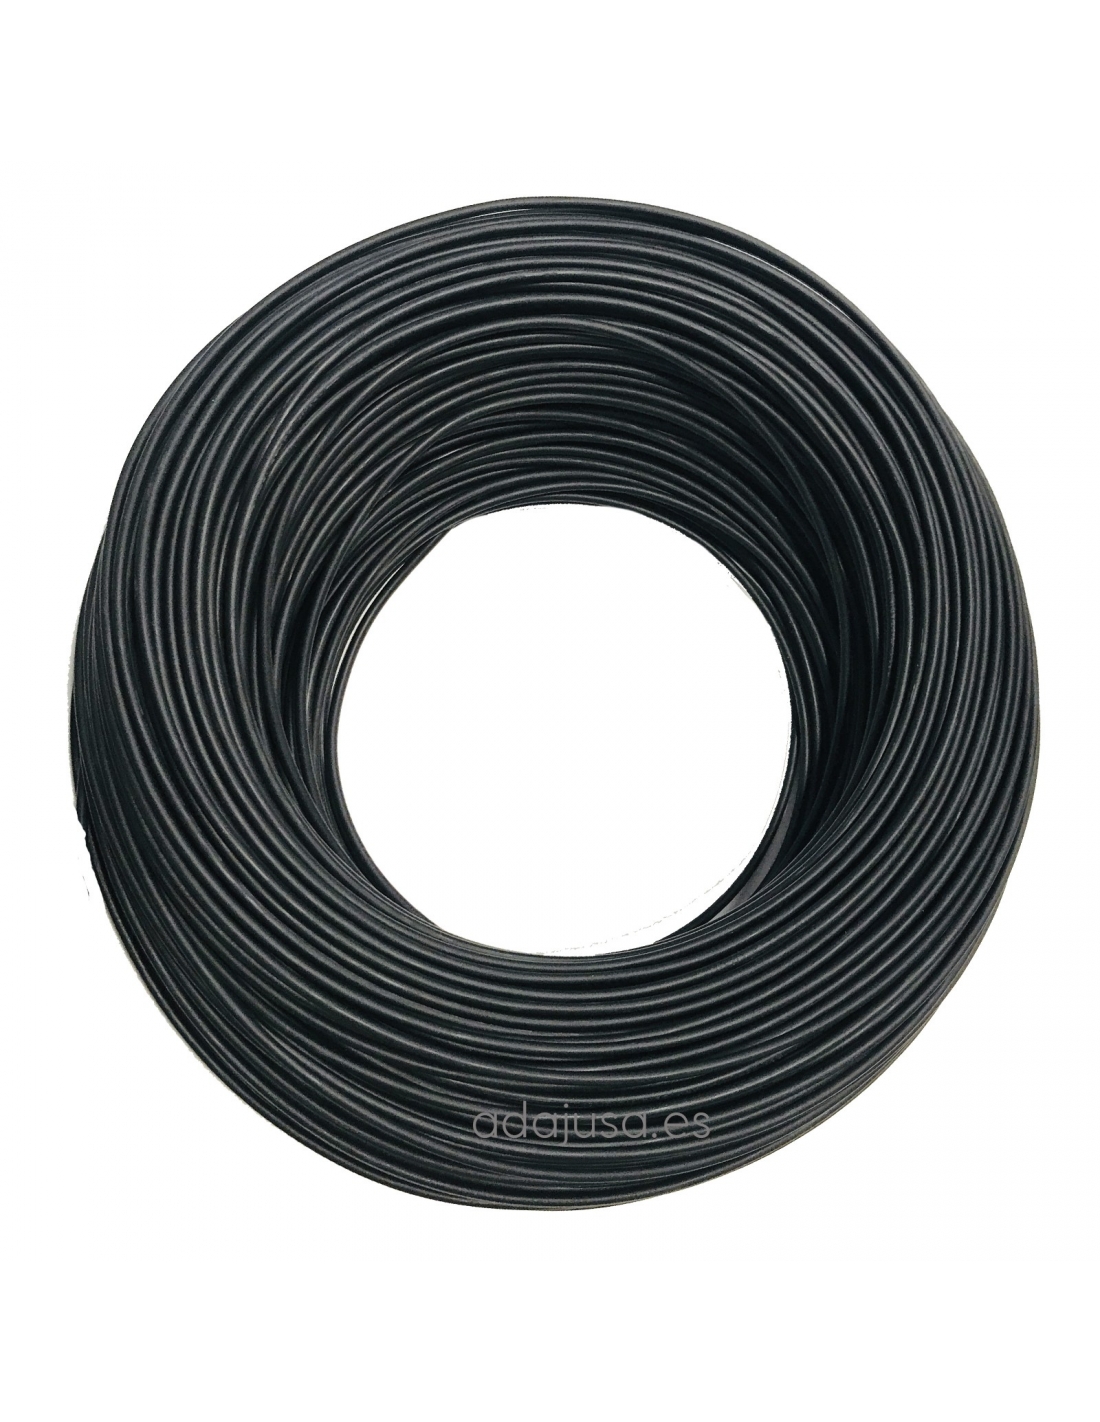 Unipolar flexible cable roll 1 mm black 100m